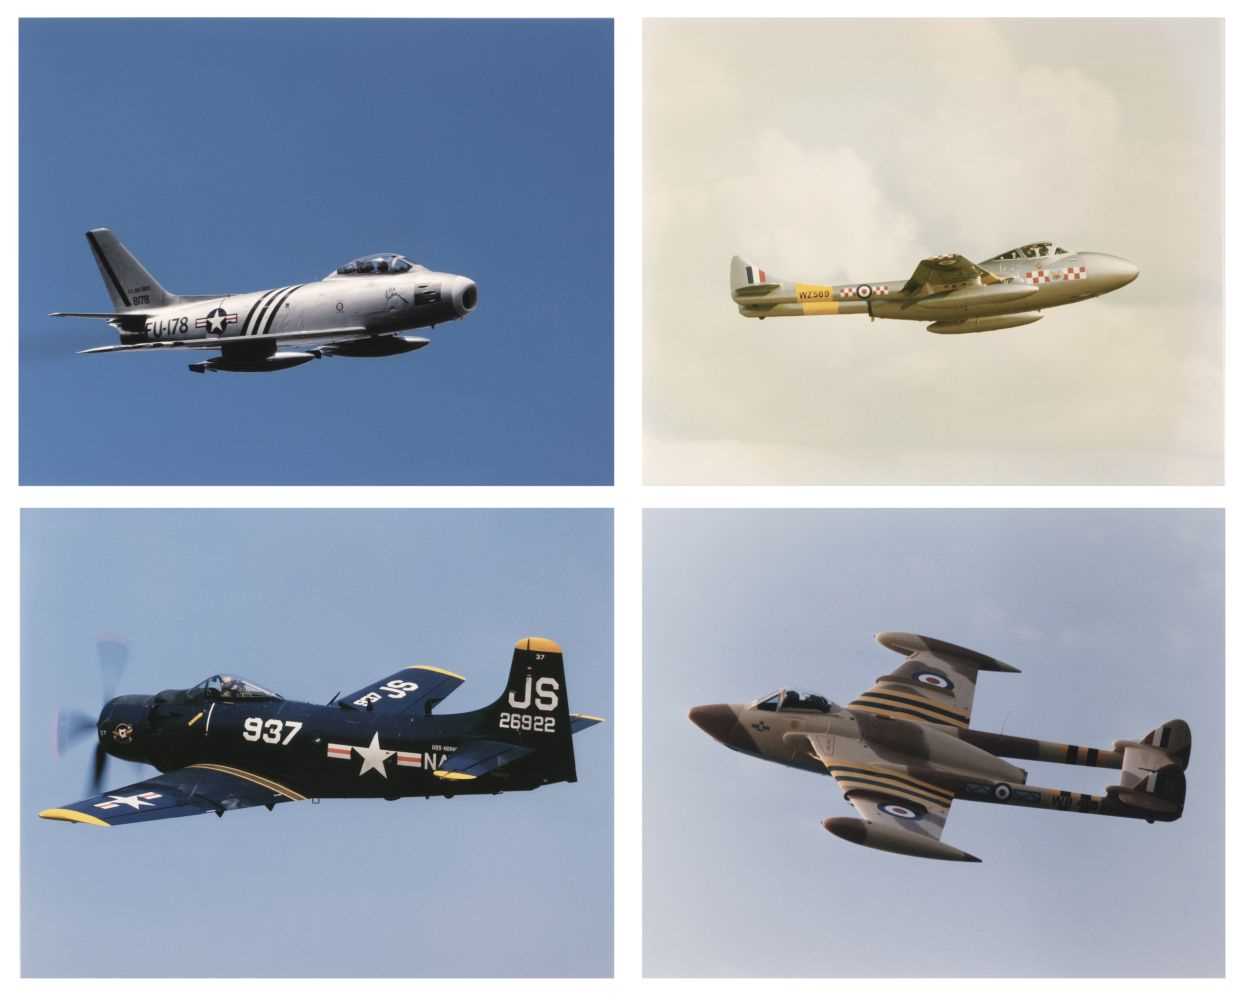 Lot 13 - Aviation Photographs. Colour military aircraft photographs